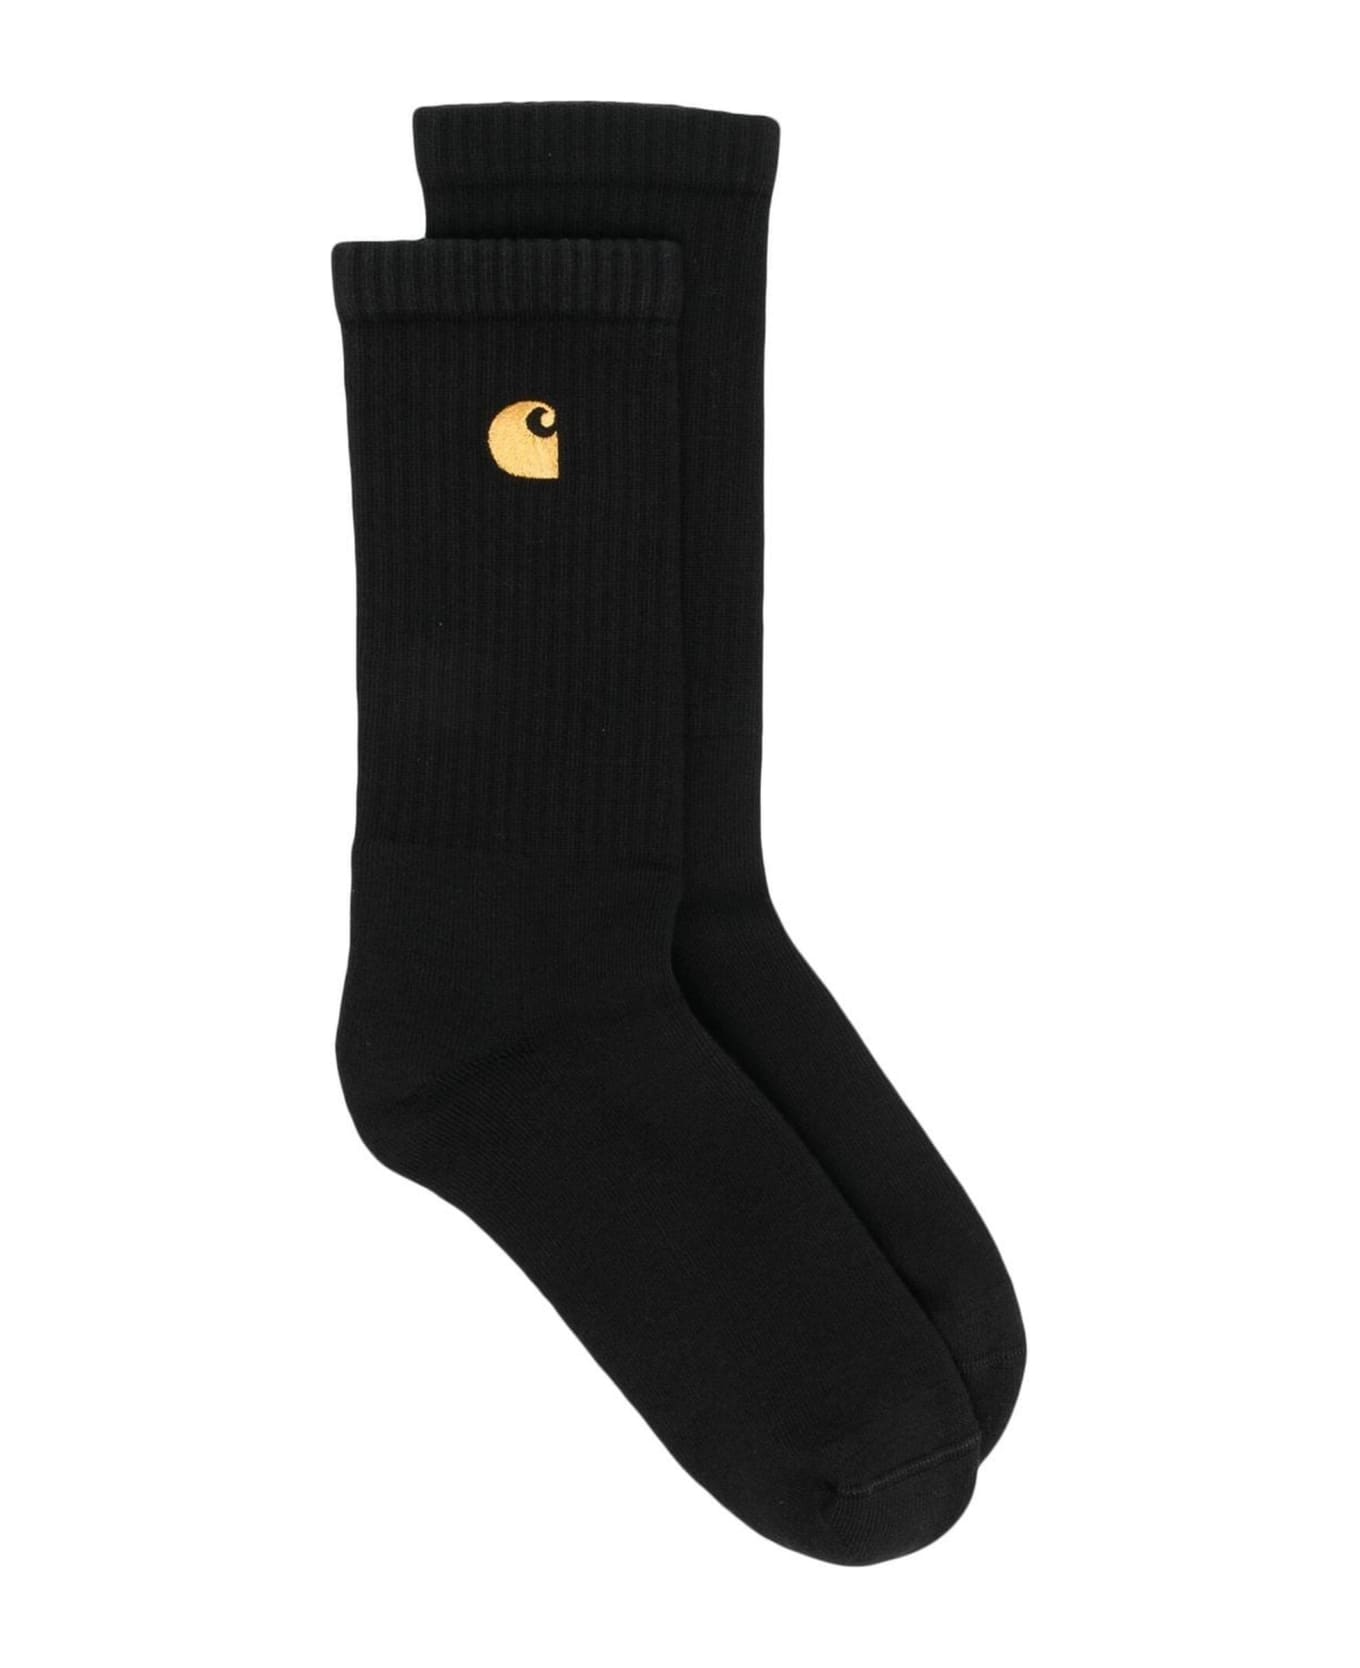 Carhartt Black Cotton Blend Socks - Nero